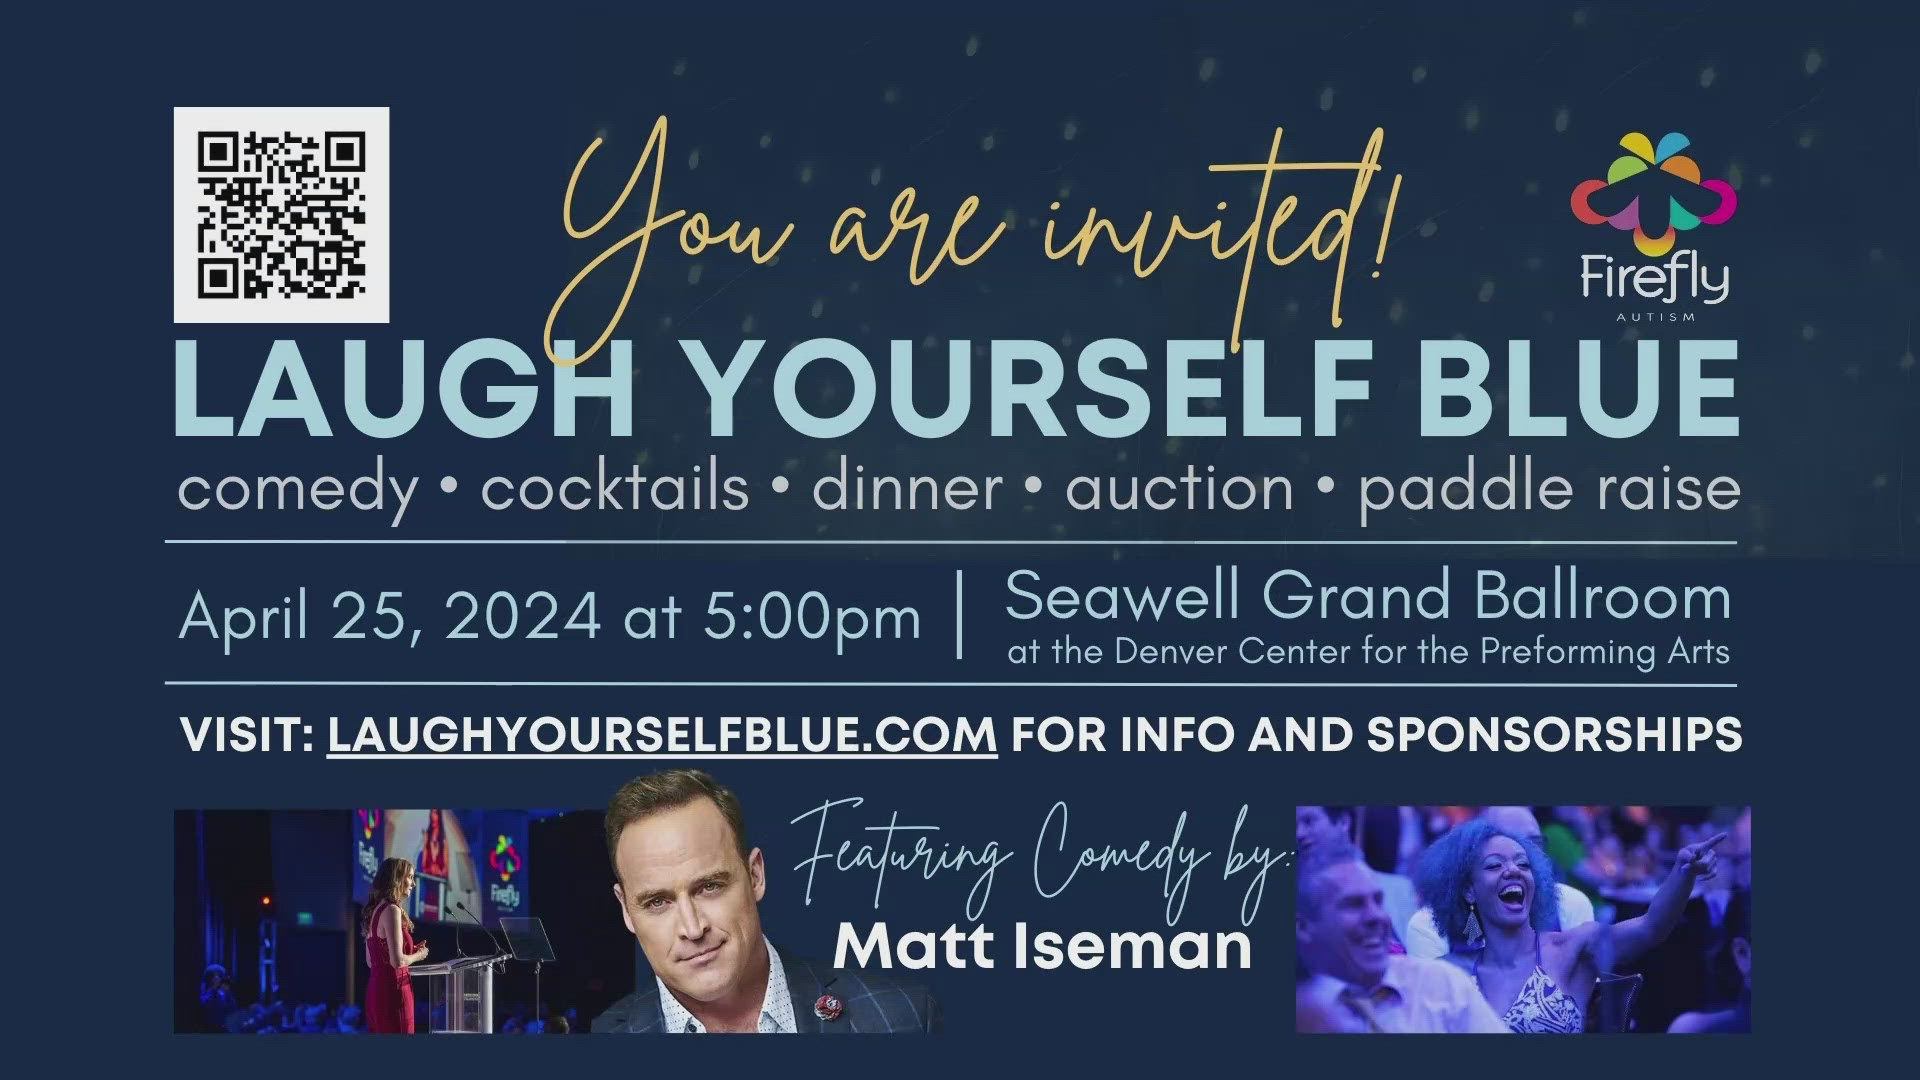 Comedian and host of 'American Ninja Warrior' Matt Iseman is headlining the 13th annual fundraising gala on April 25.